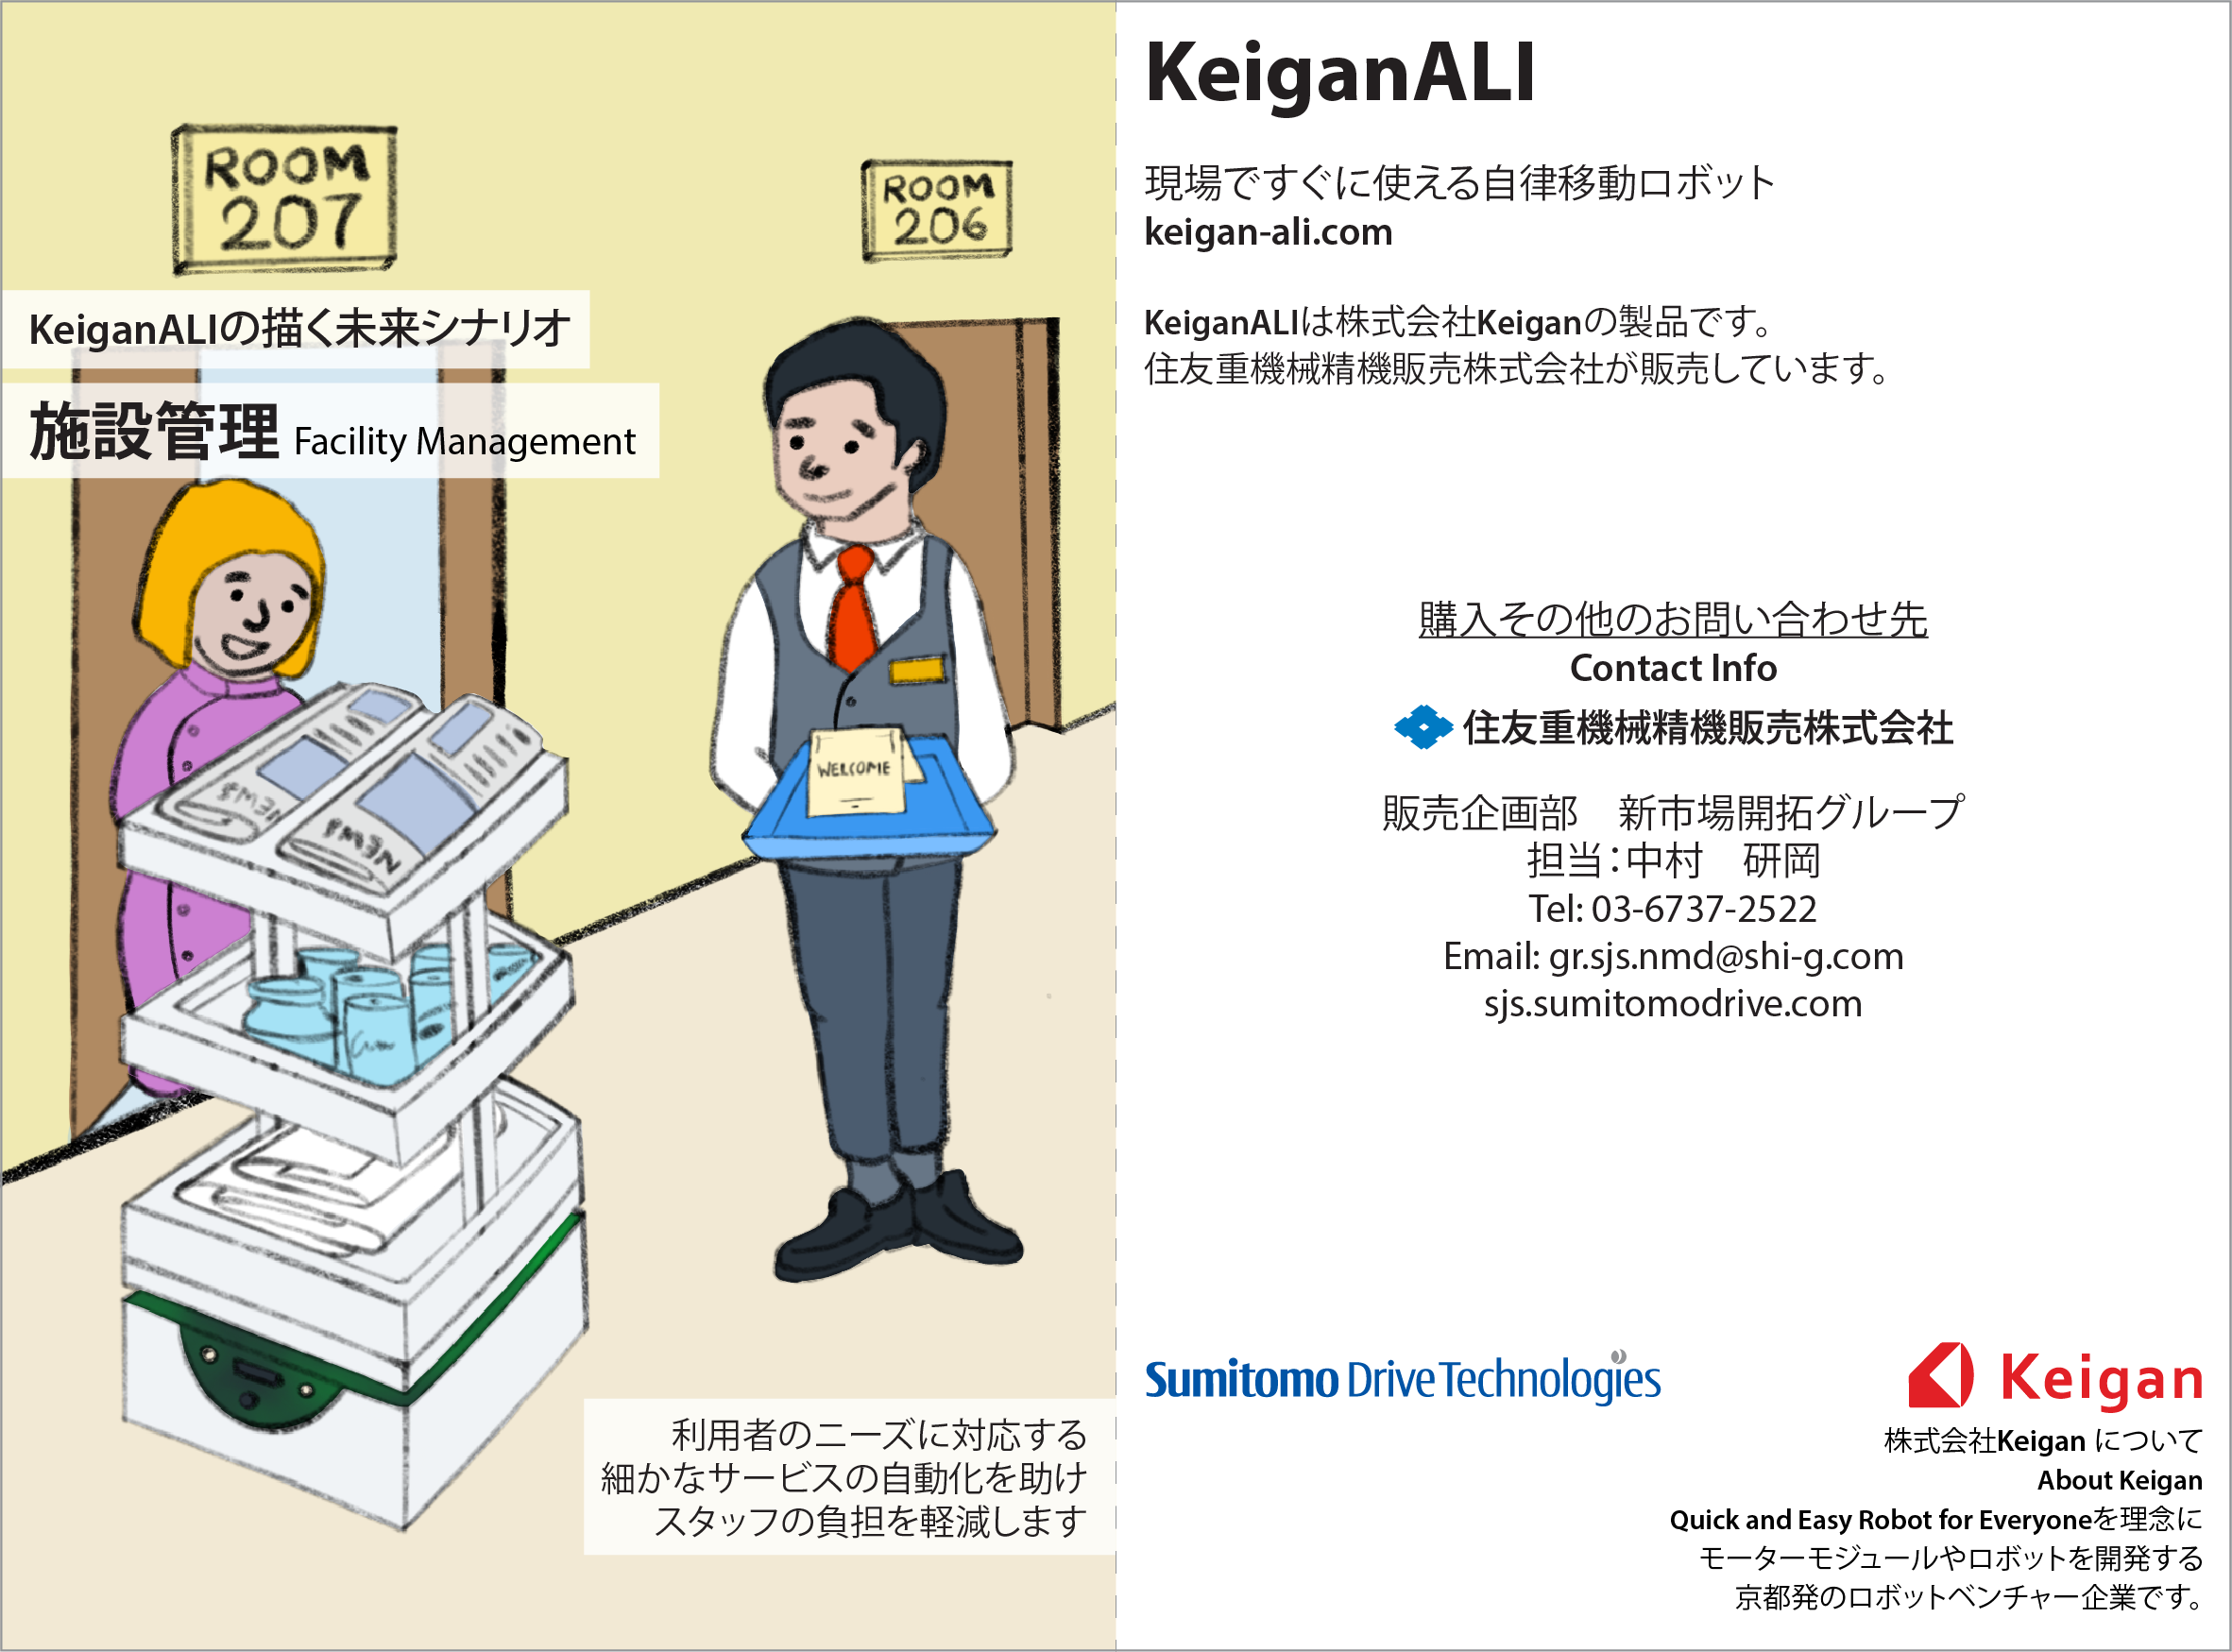 Keigan_Ali_Postcards-Facility_Management.png